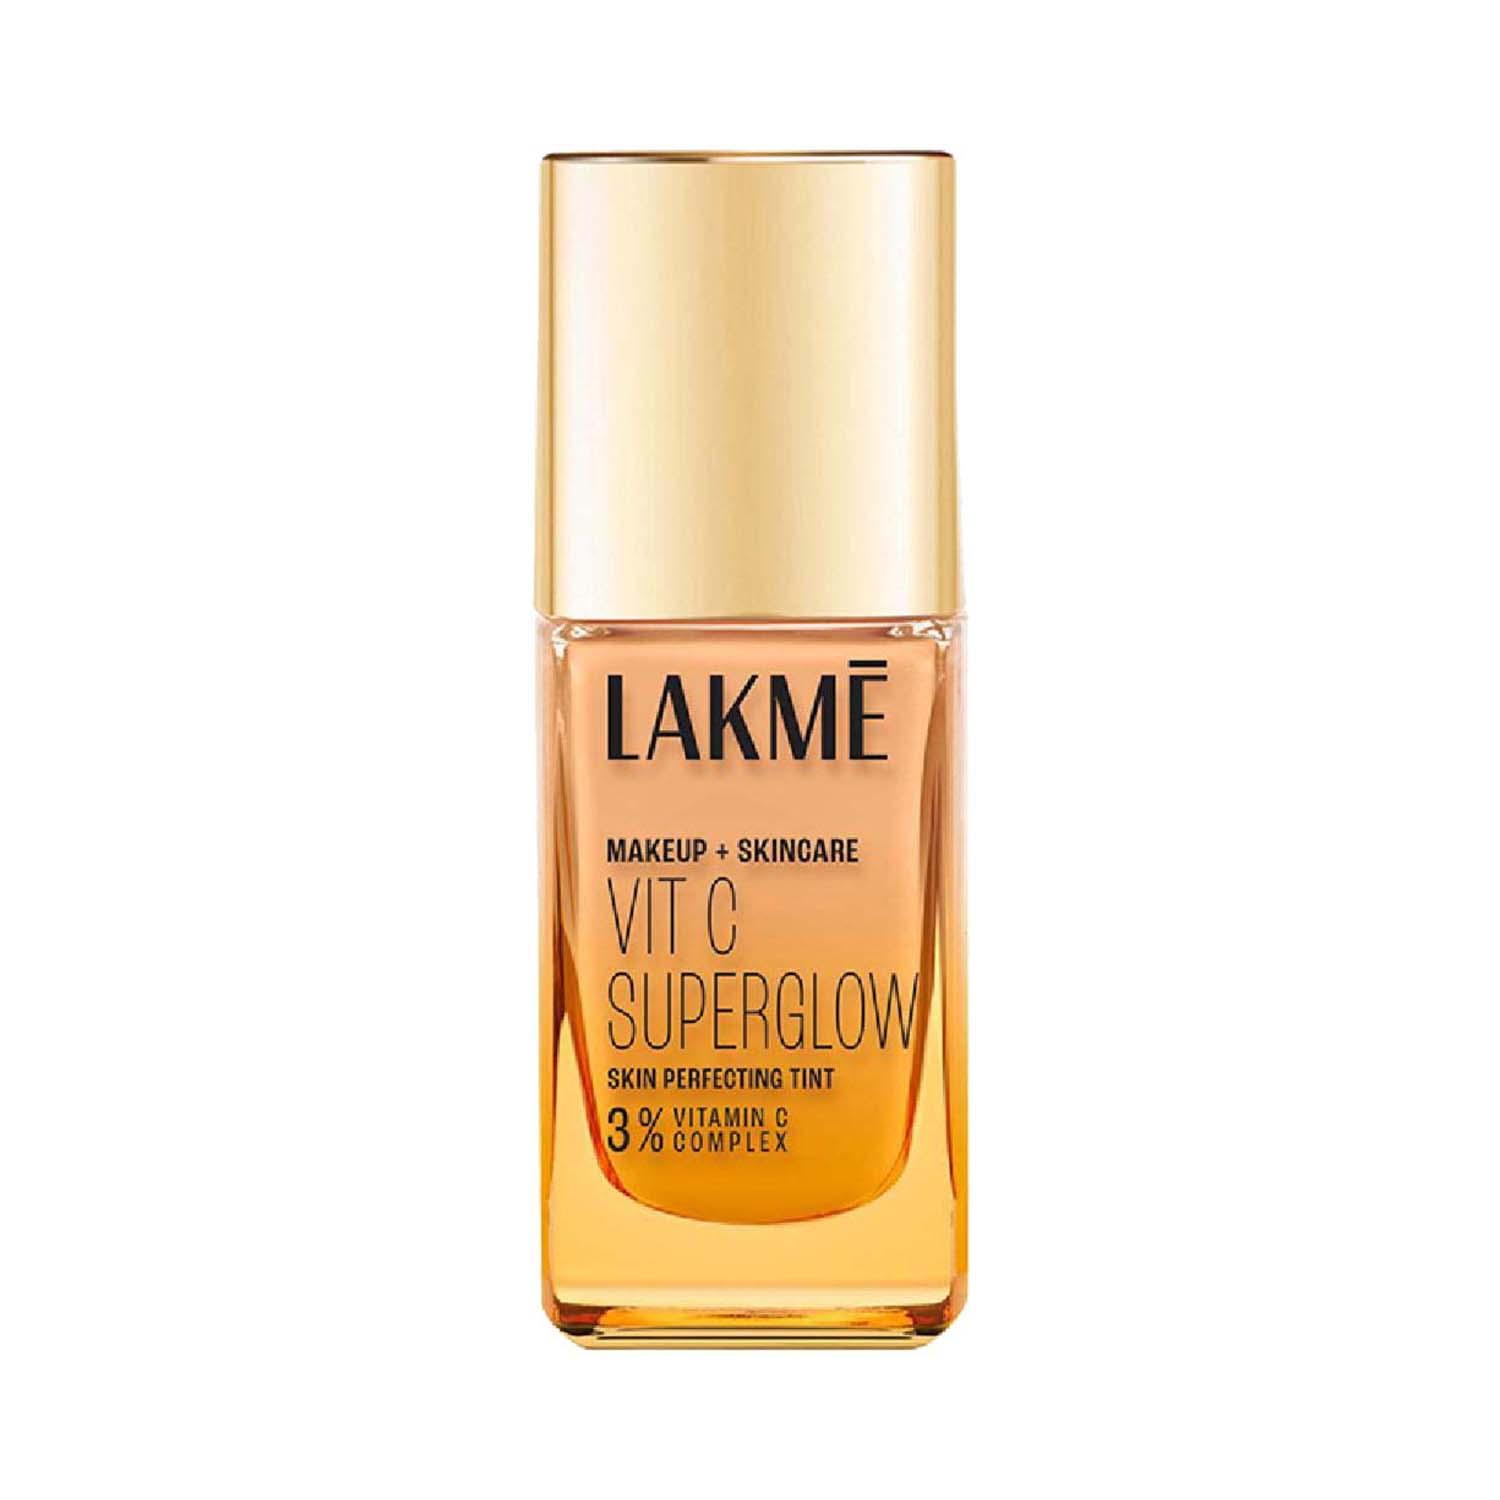 Lakme | Lakme Makeup+Skincare Vit C Superglow Skin Perfecting Tint - Warm Creme W120 (25 ml)